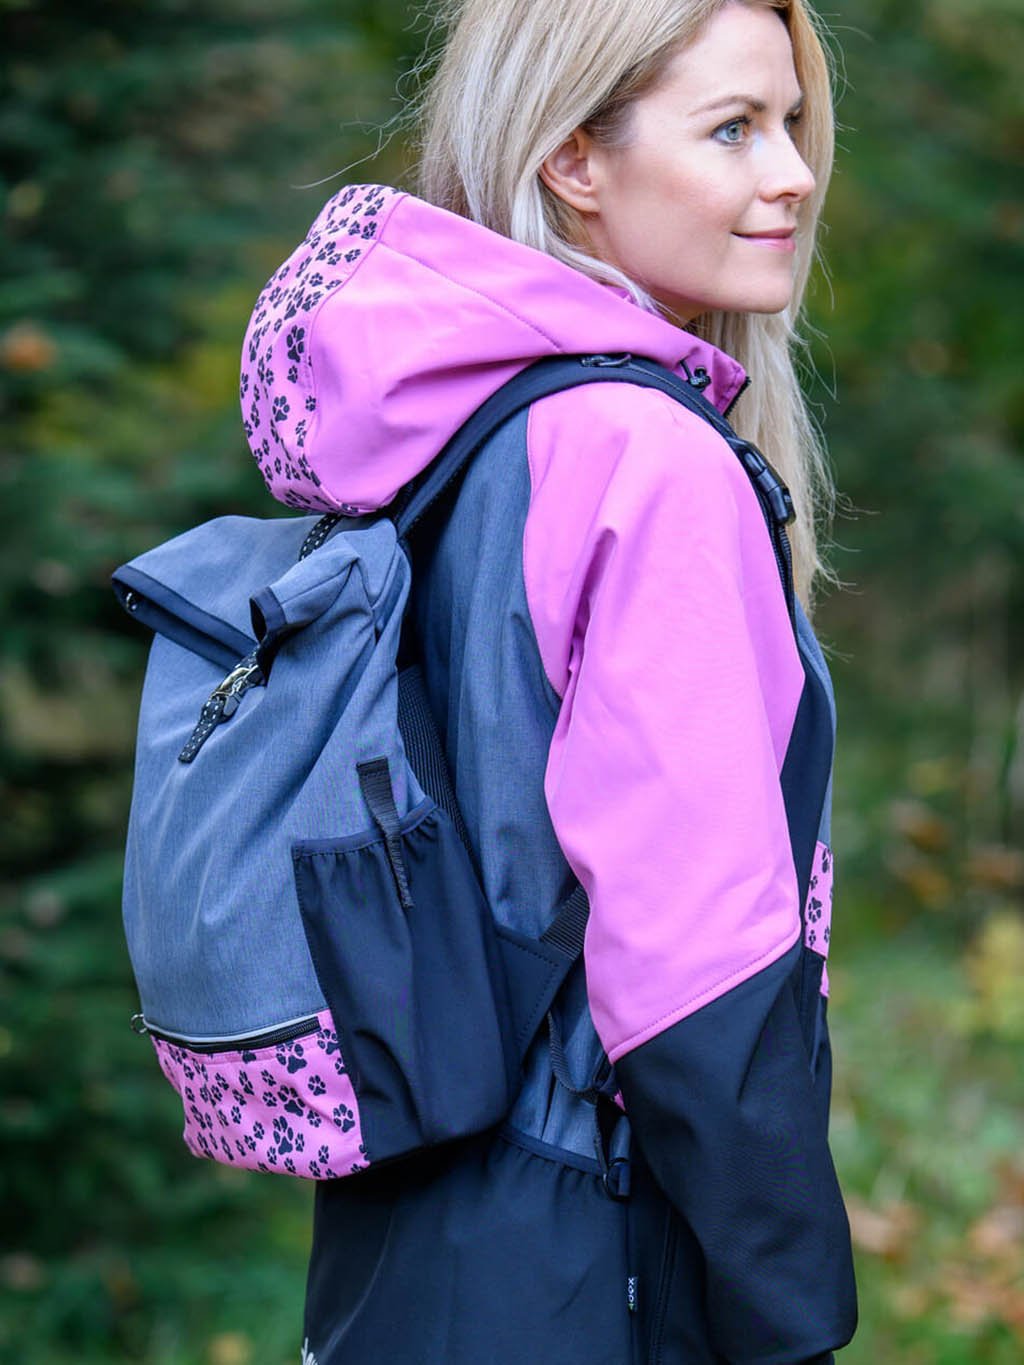 LEVANDULE training backpack with top zipper closure 4dox